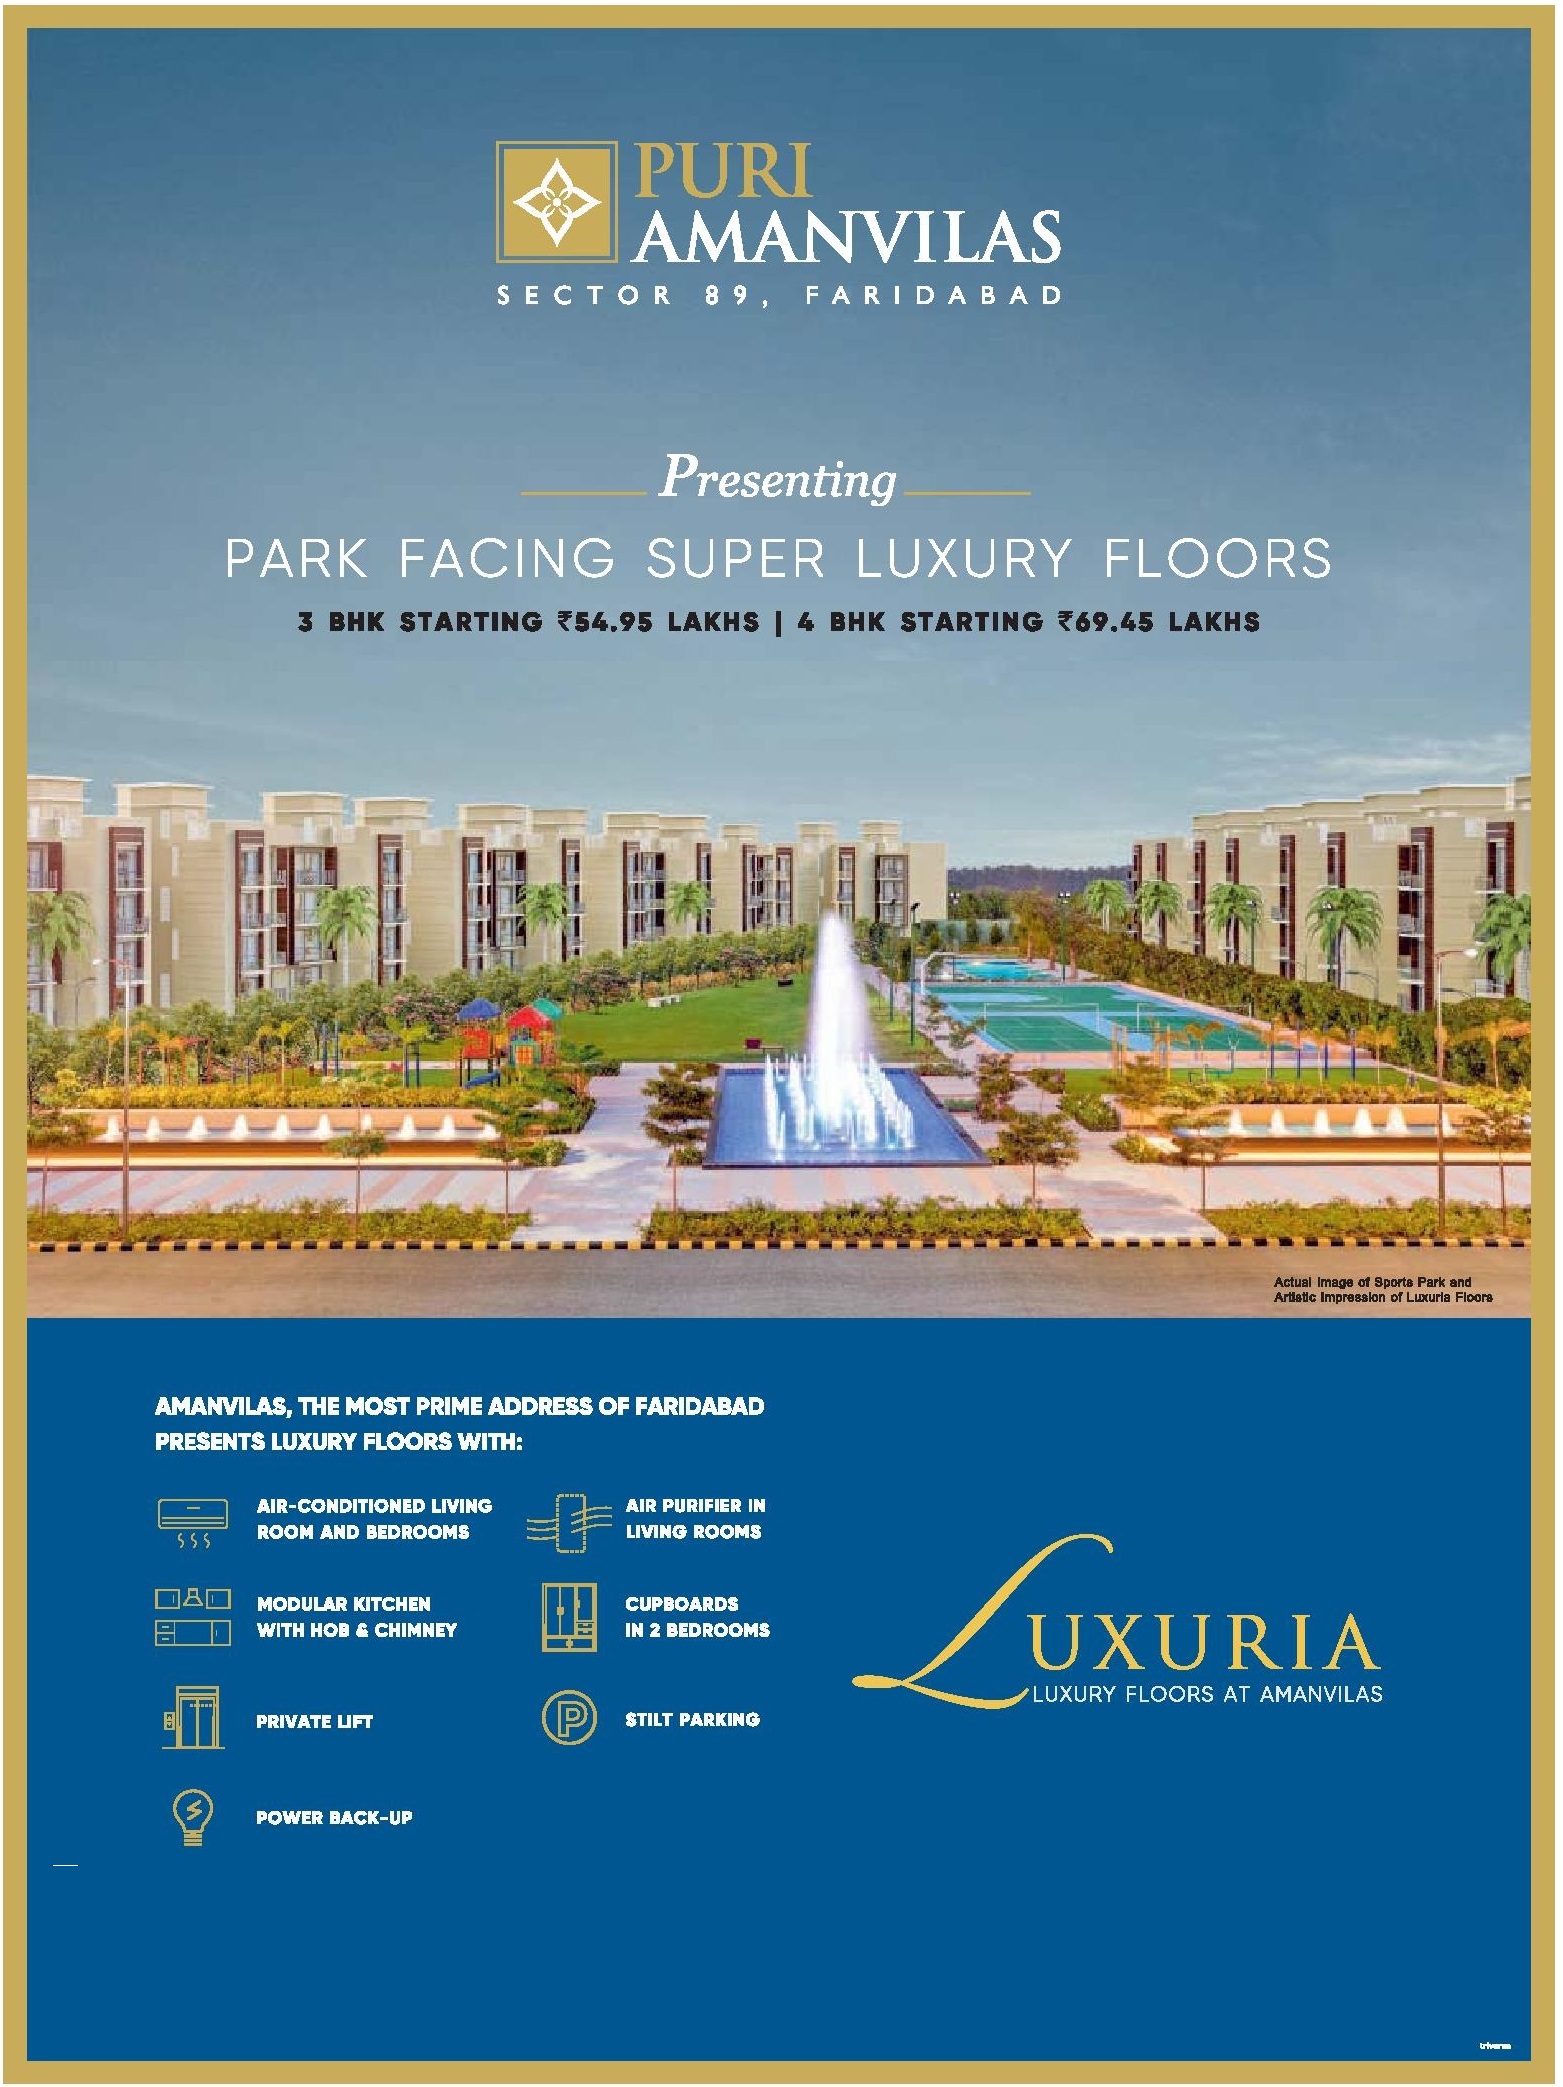 Presenting park facing super luxury floors at Puri Amanvilas in Faridabad